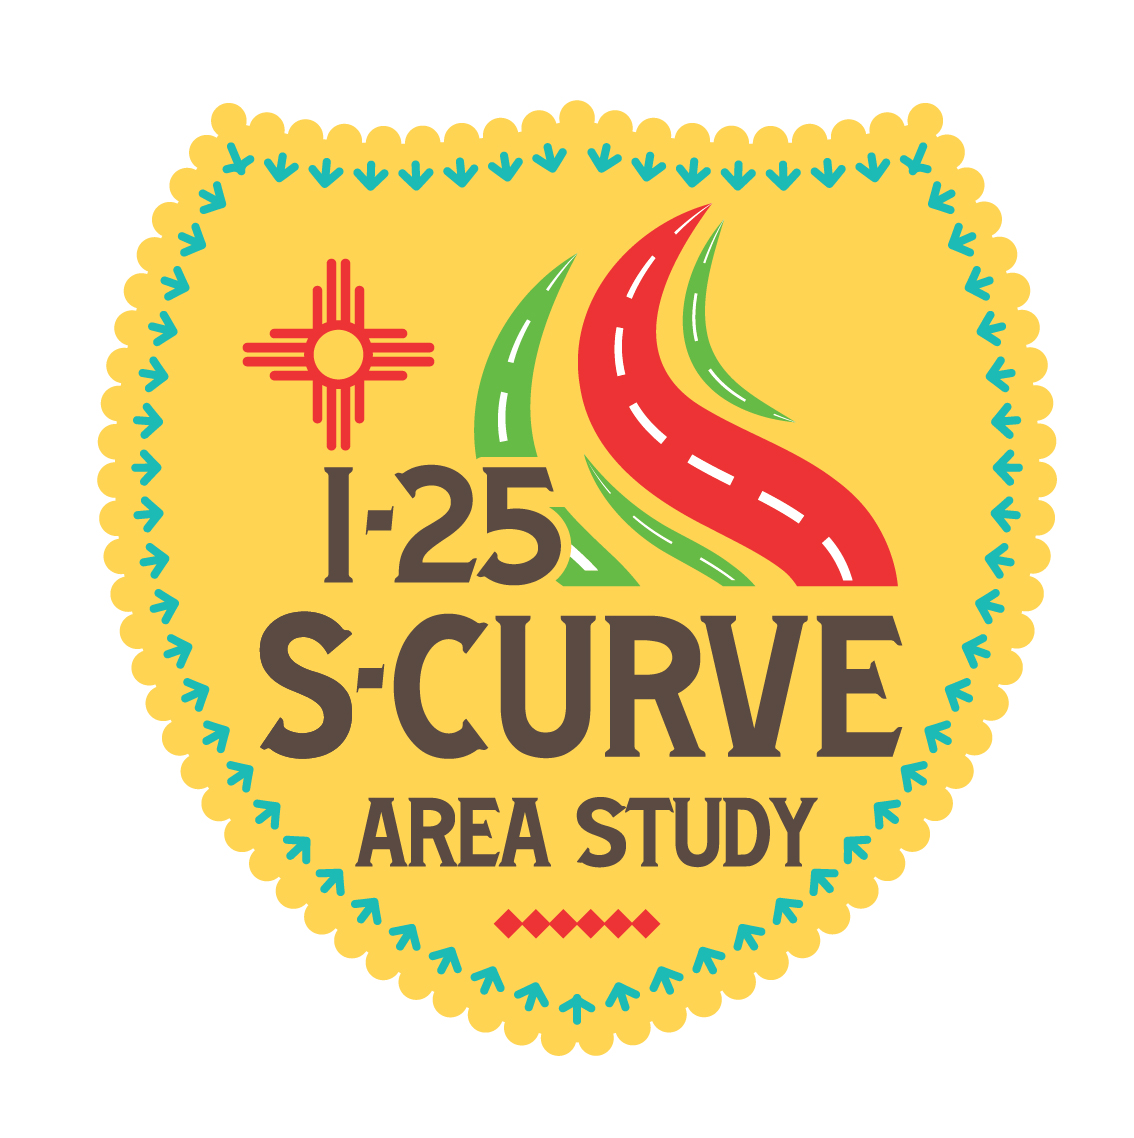 S-curve study logo